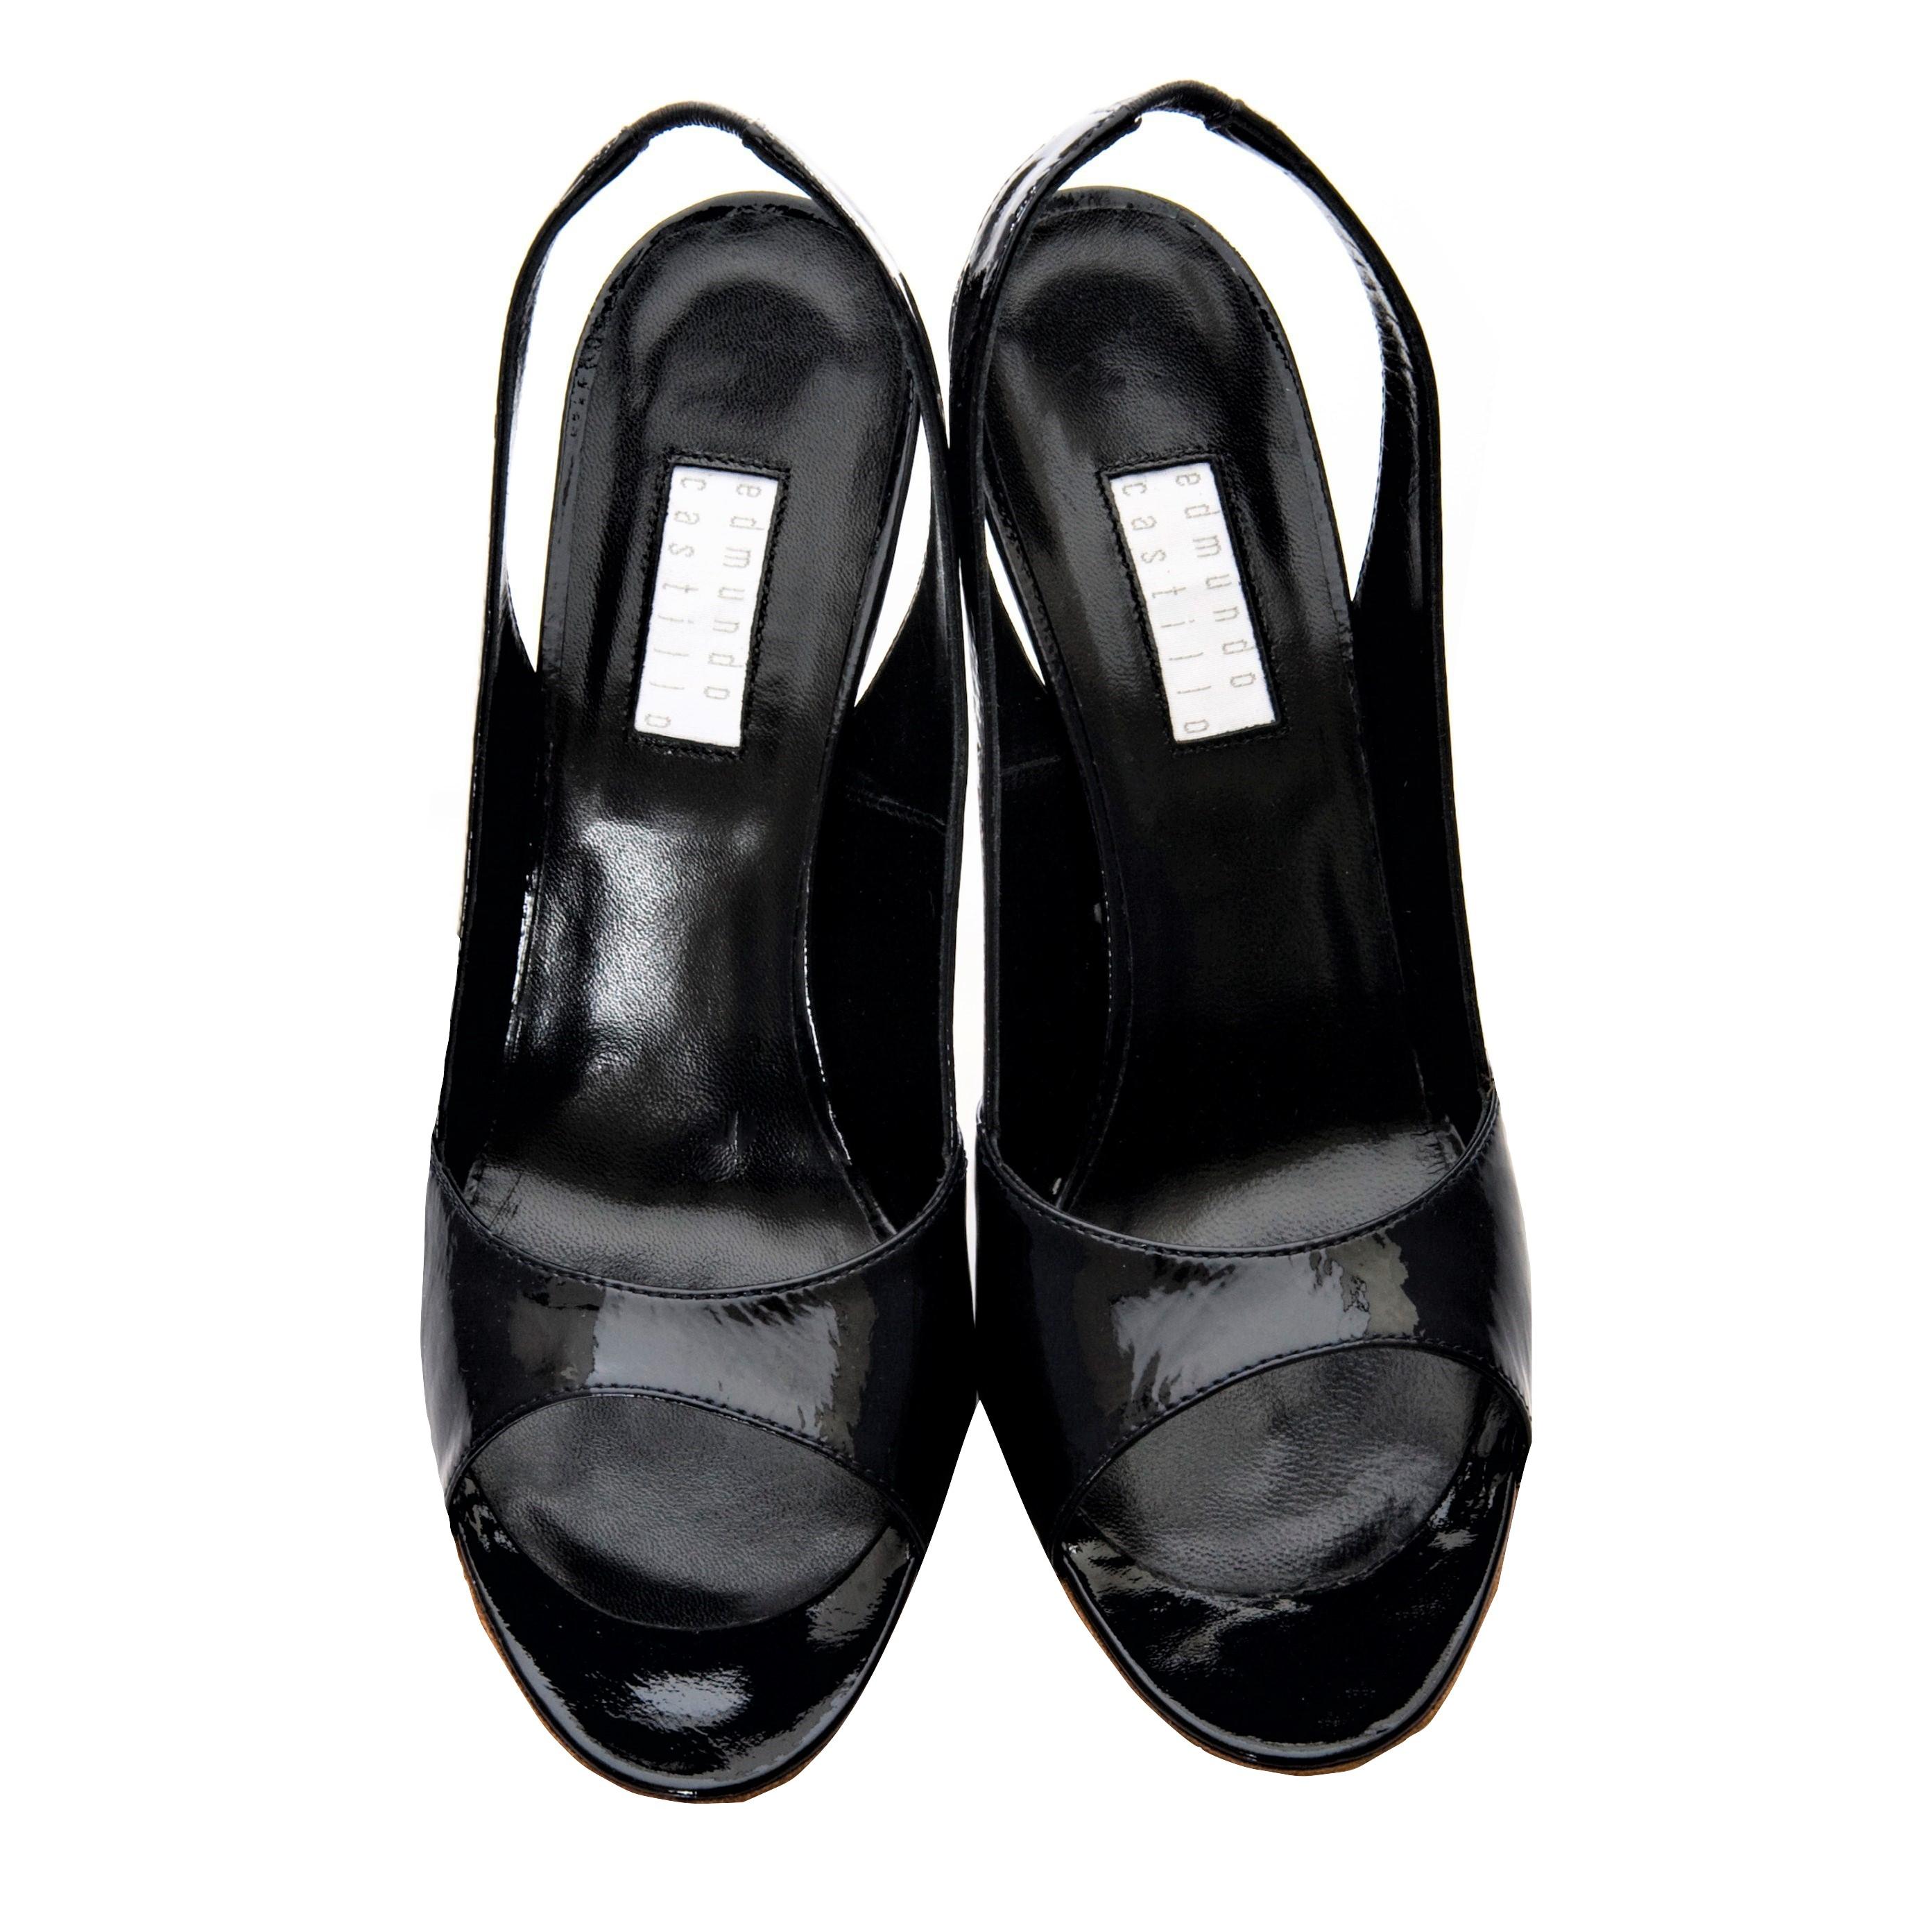 New Edmundo Castillo Black Patent Leather Sling Heels Sz 8.5 2